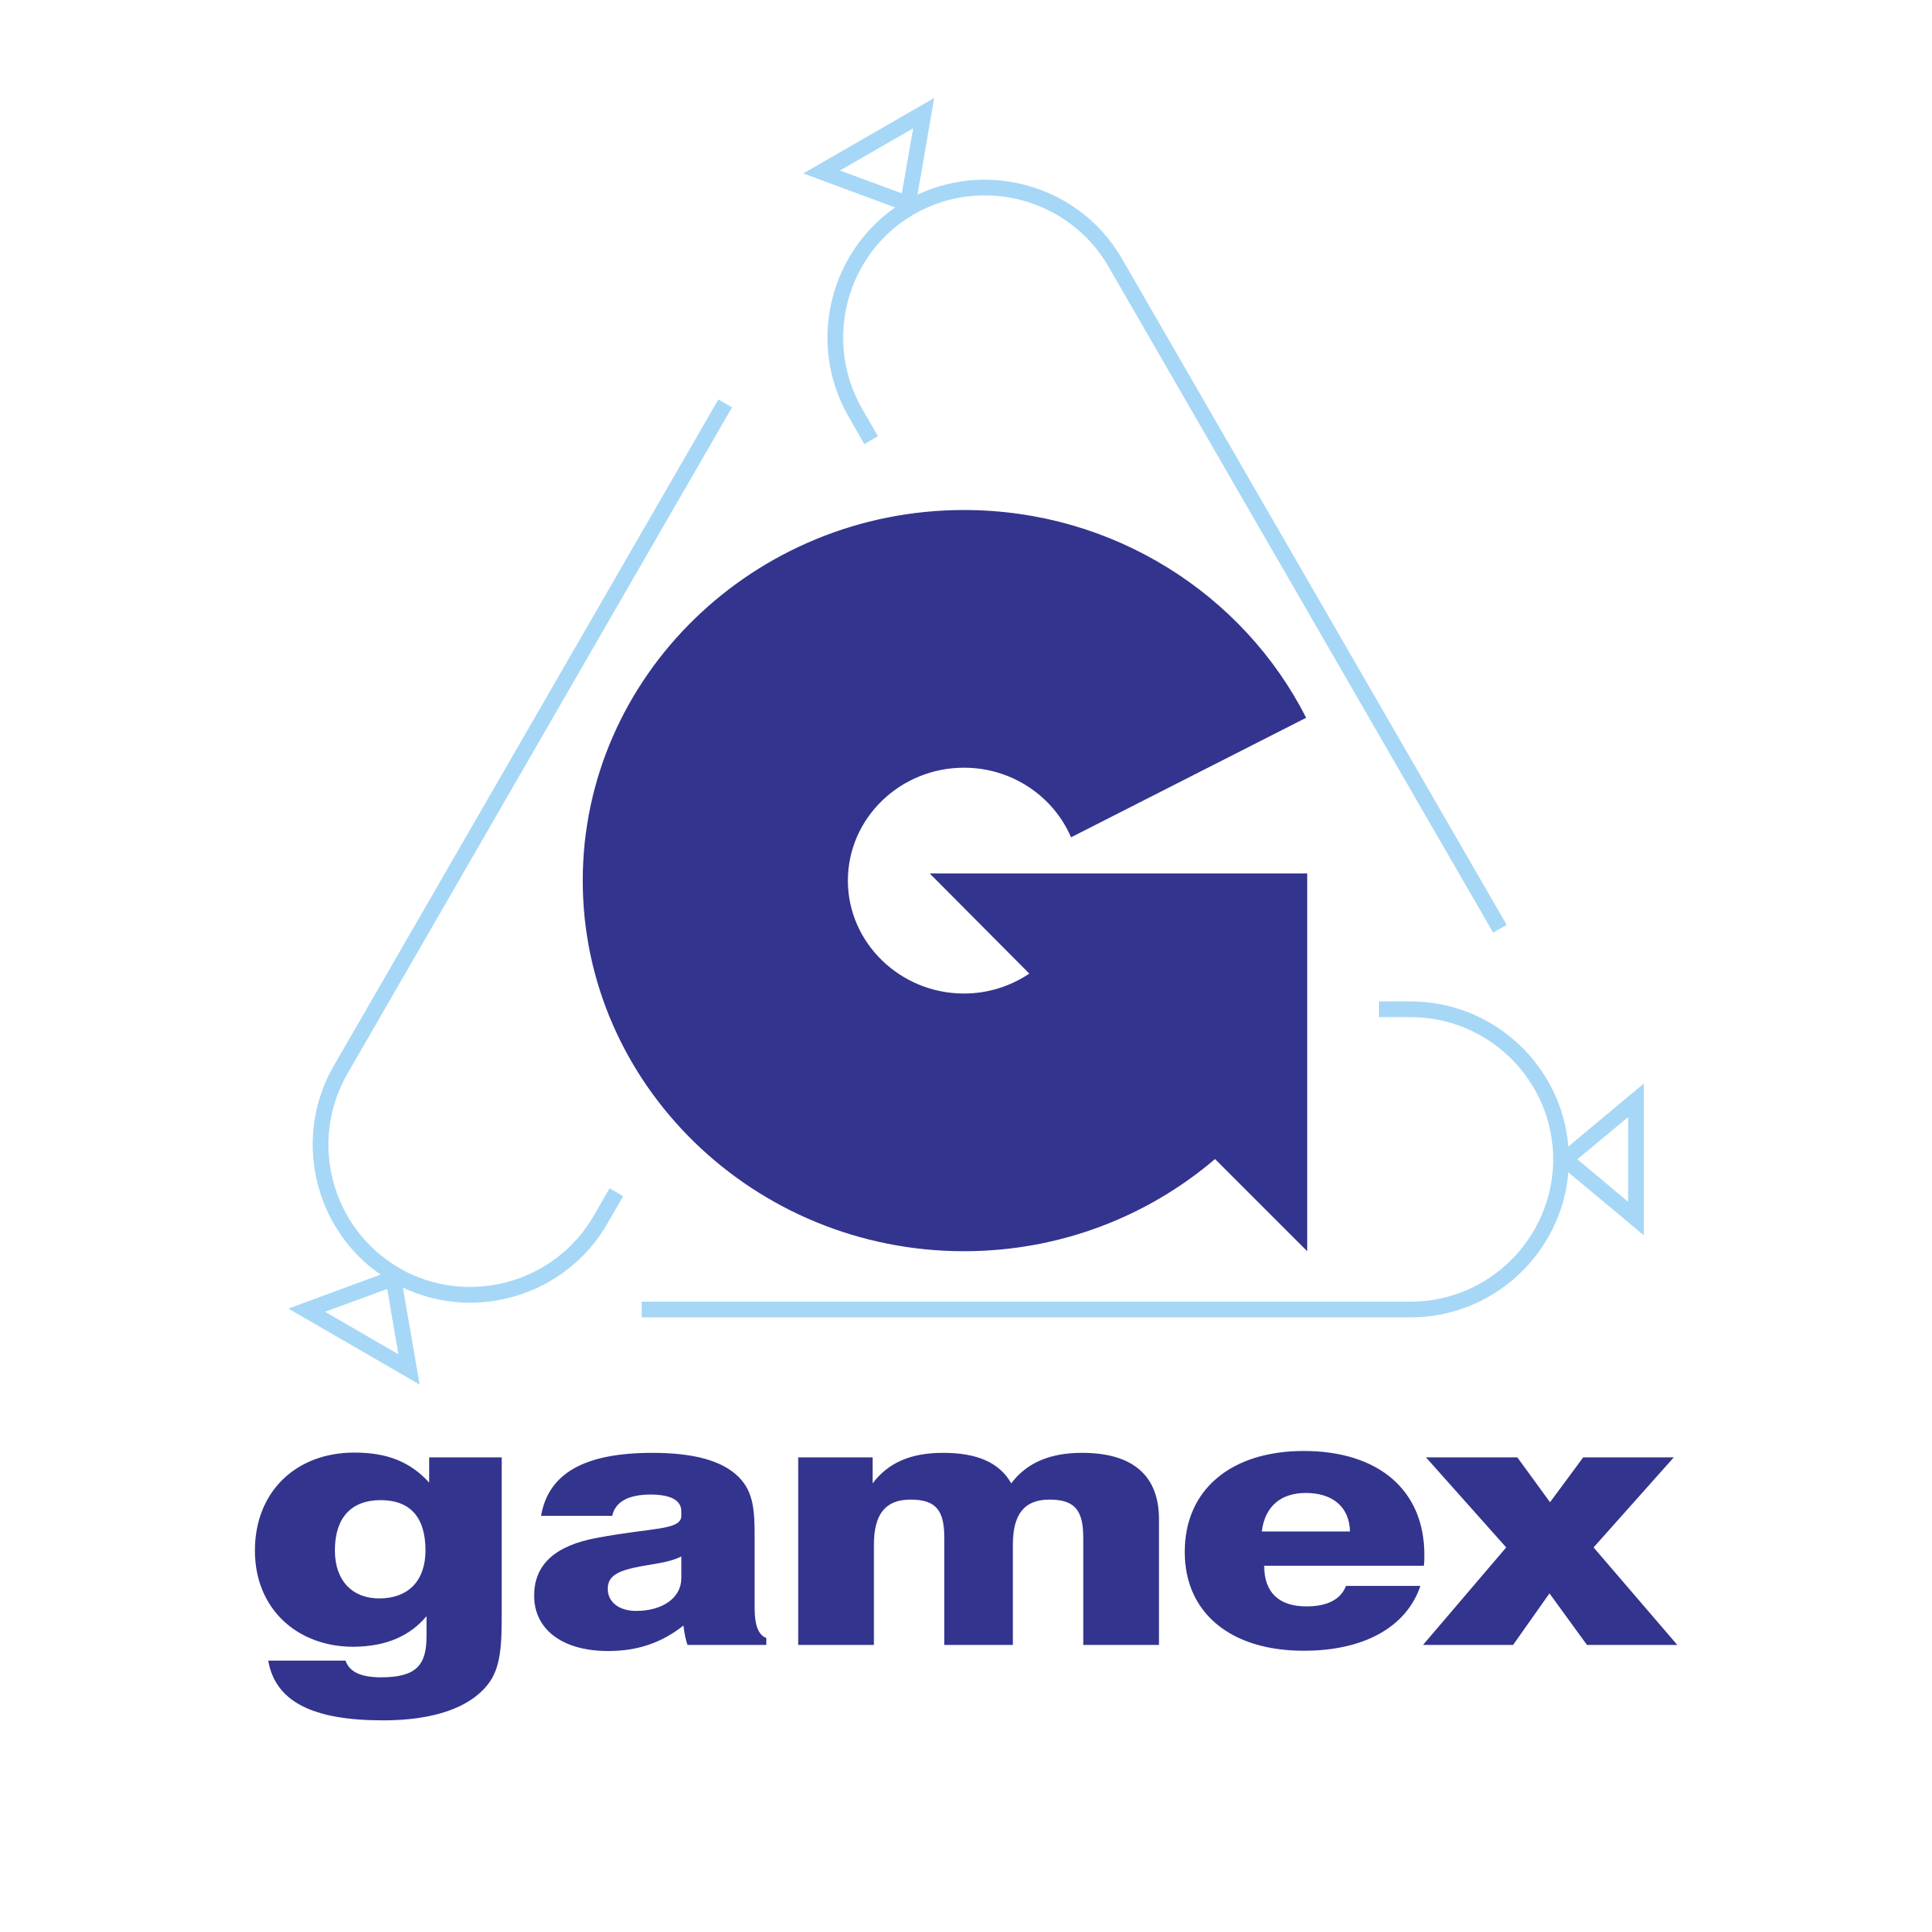 Gamex Logo - Gamex Logo PNG Transparent & SVG Vector - Freebie Supply